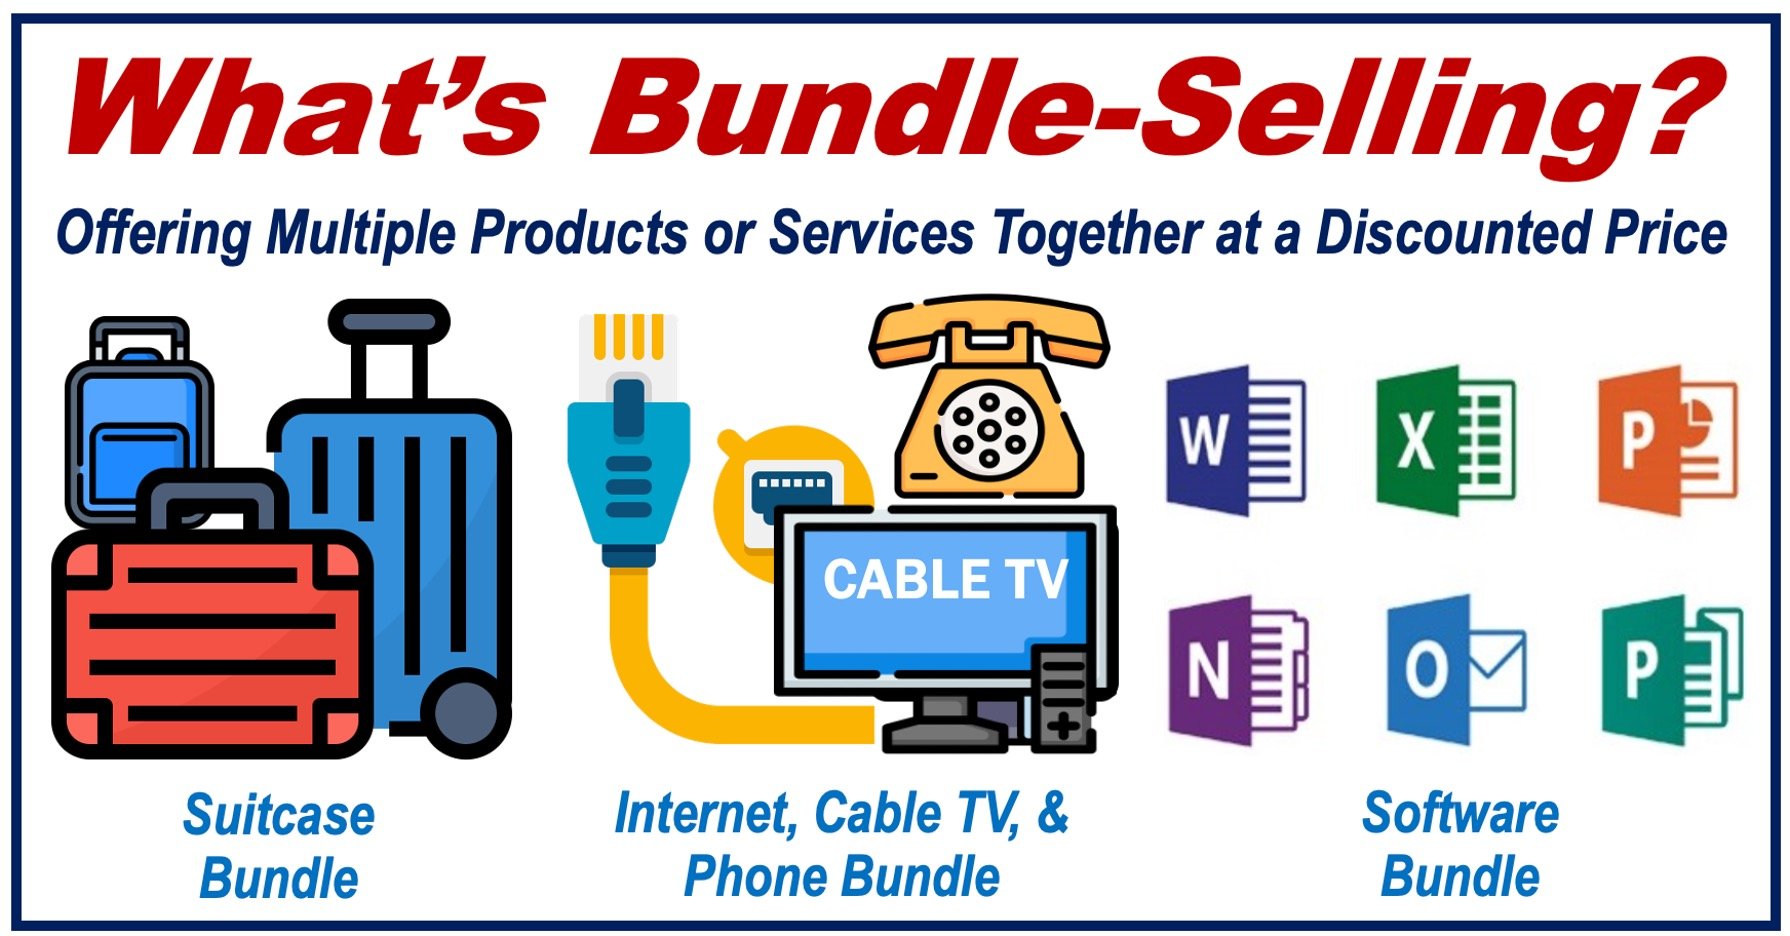 3 depictions of bundle-selling - a suitcase bundle; Internet, Cable TV, and Phone Bundle; and Software Bundle